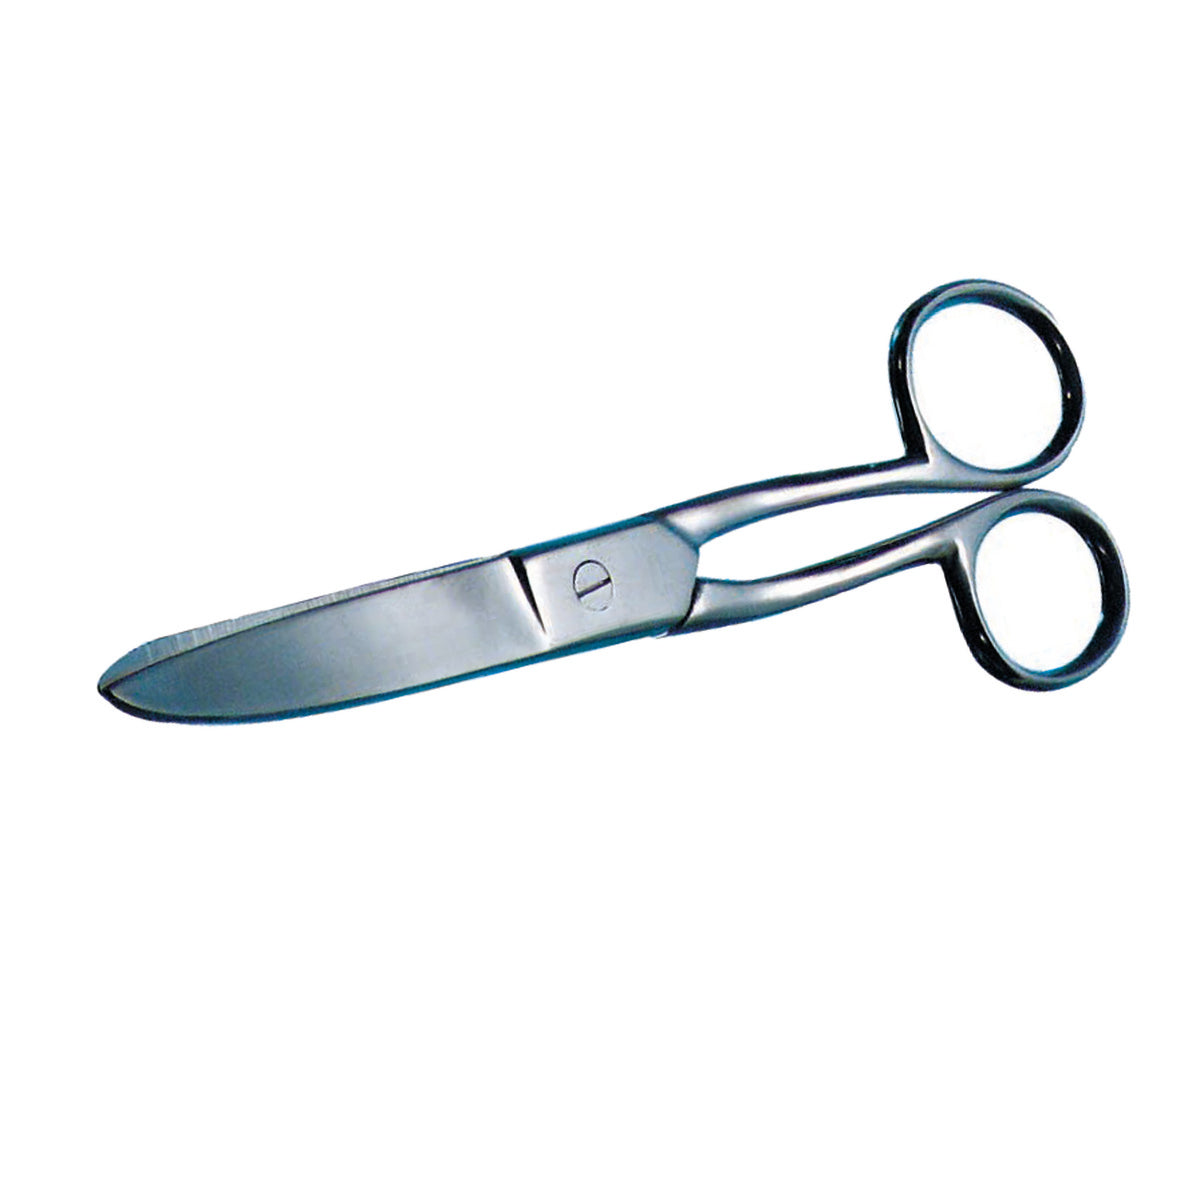 Clipping Scissors 7in